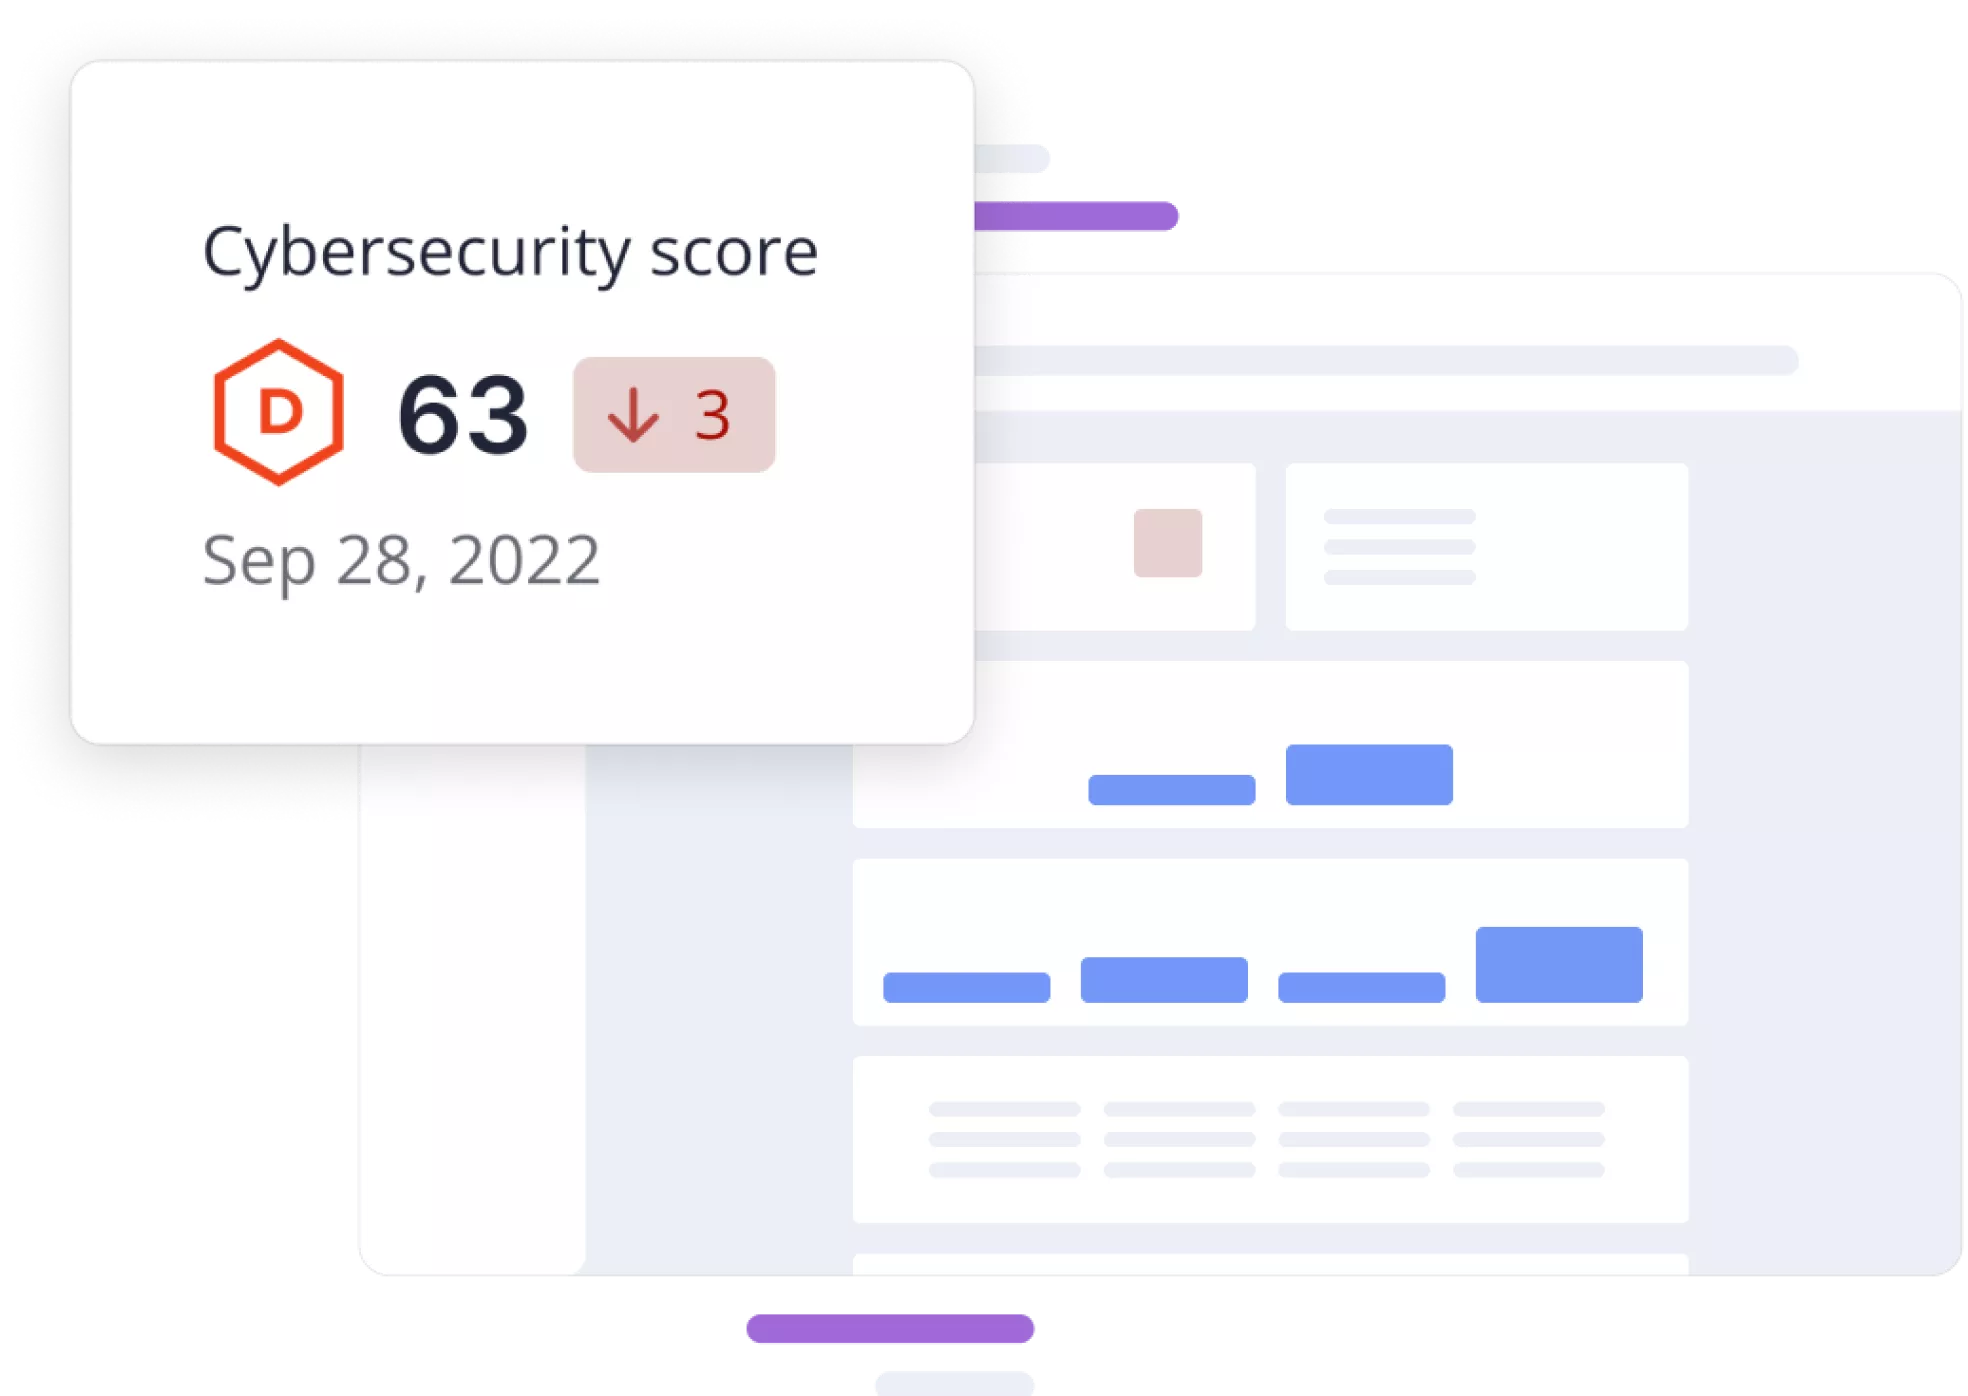 Cox Cybersecurity score